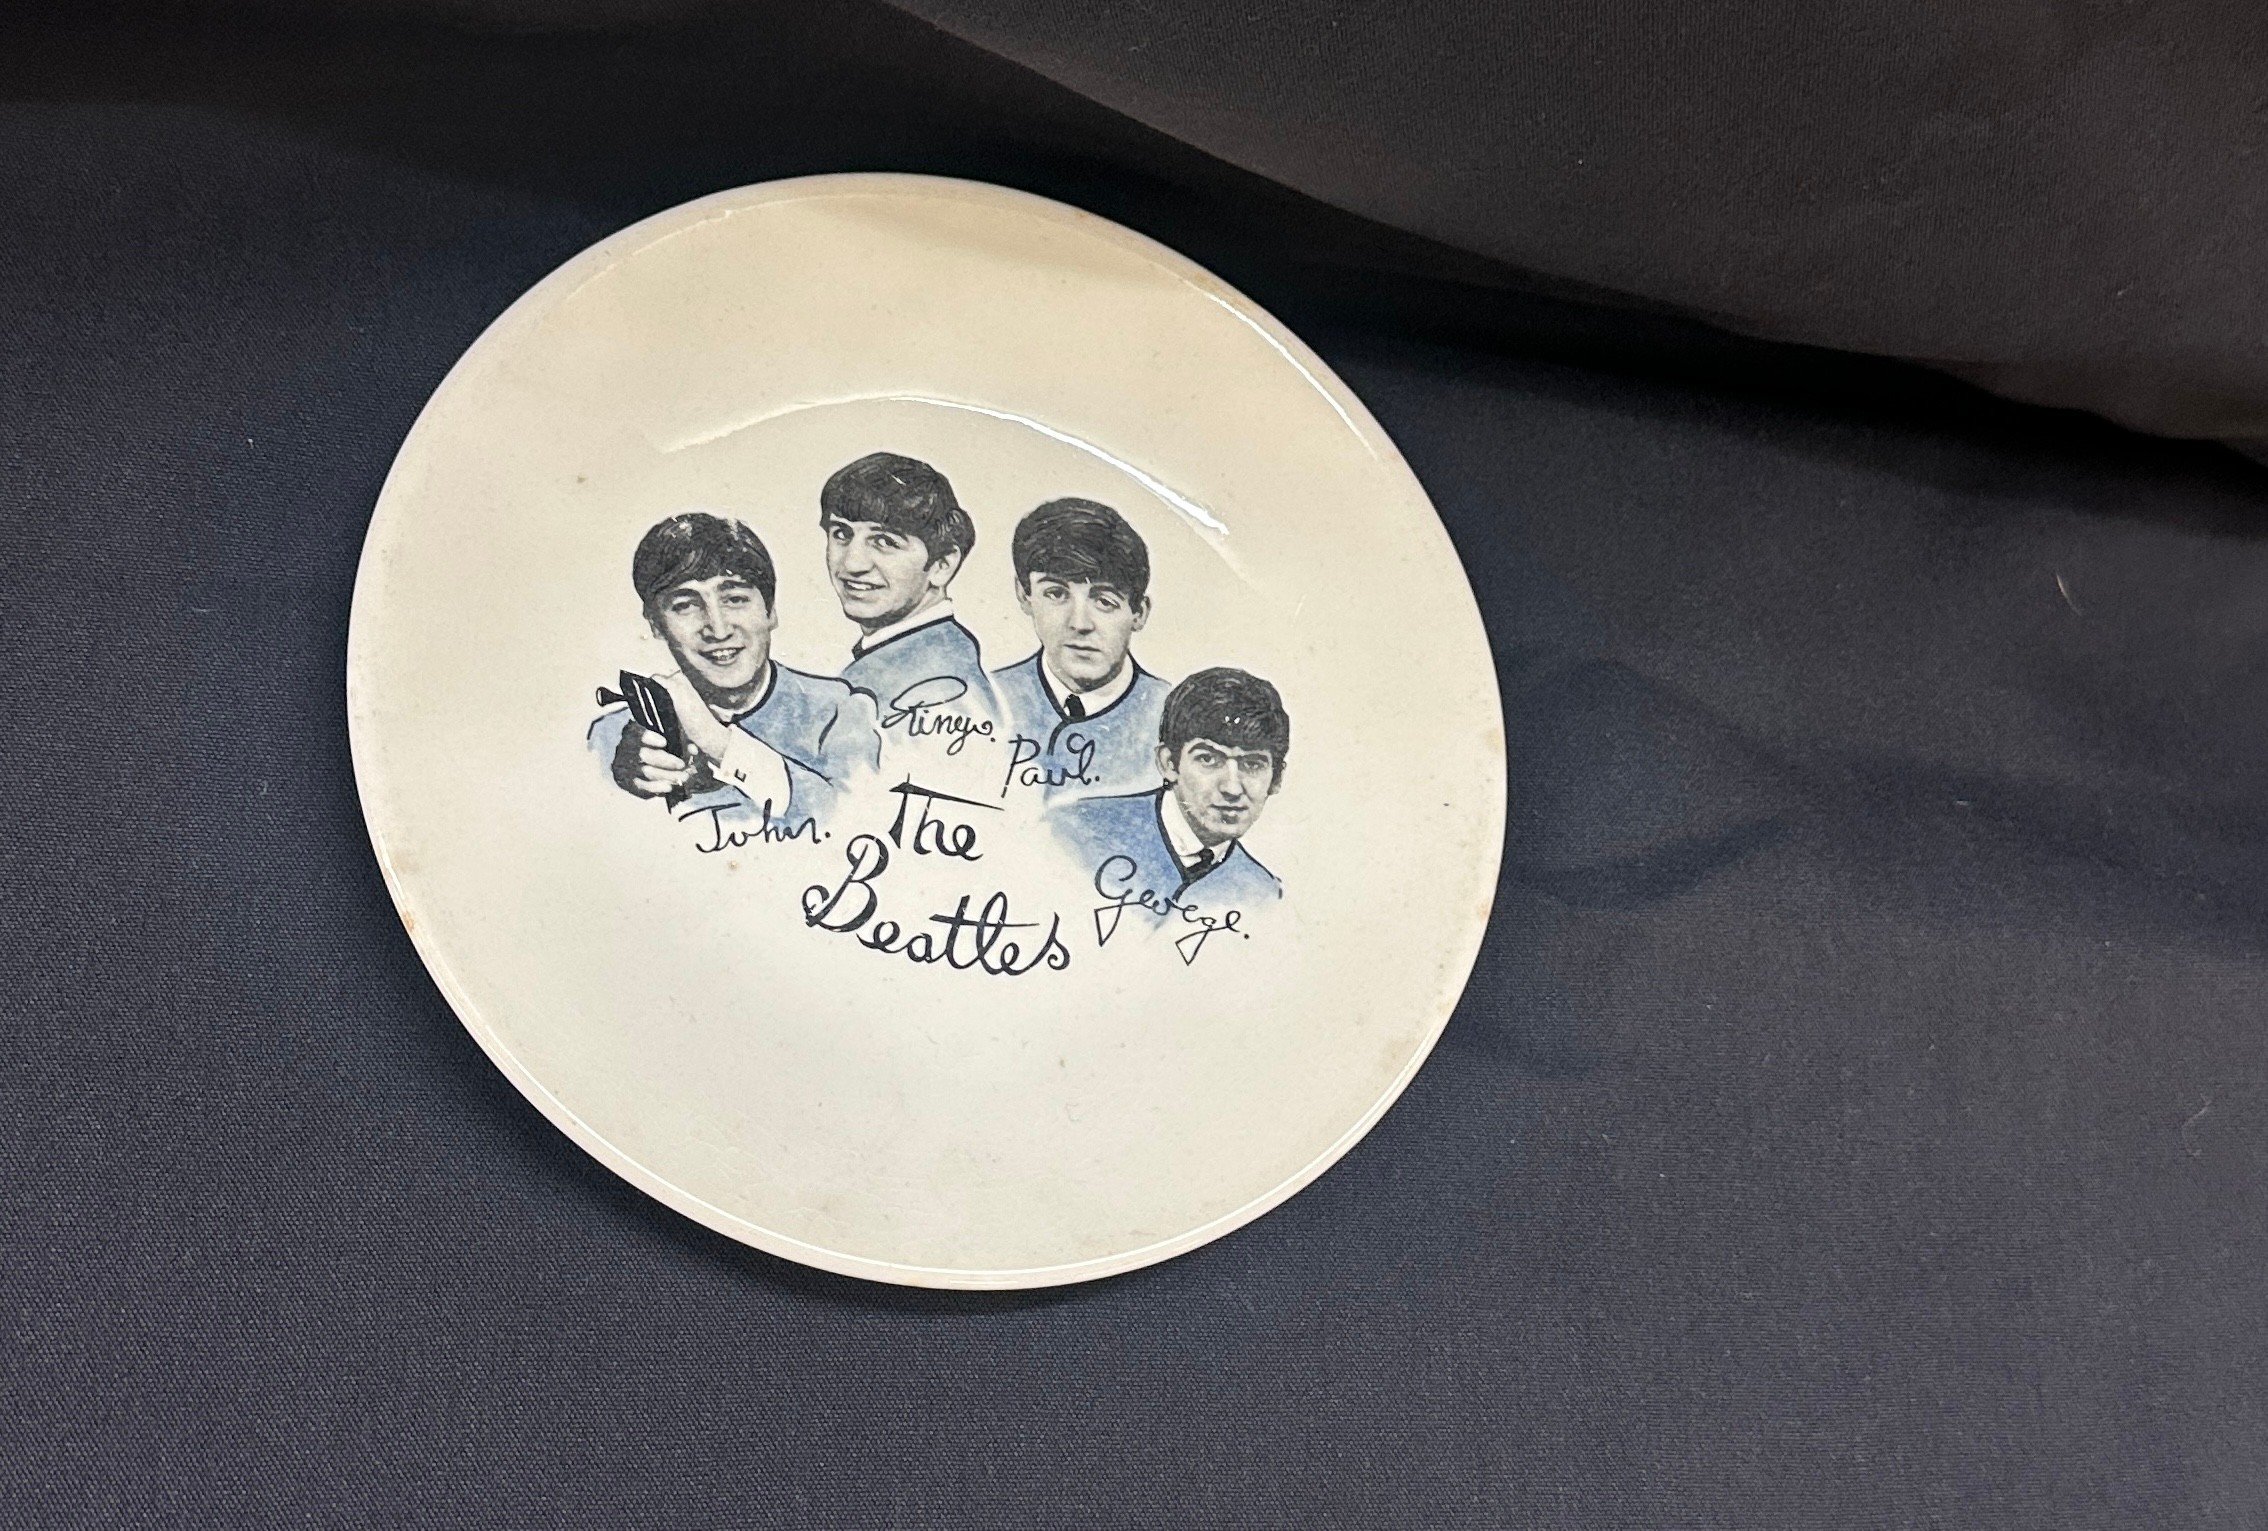 Original 60's era Beatles plate measures approx 7 inches diameter